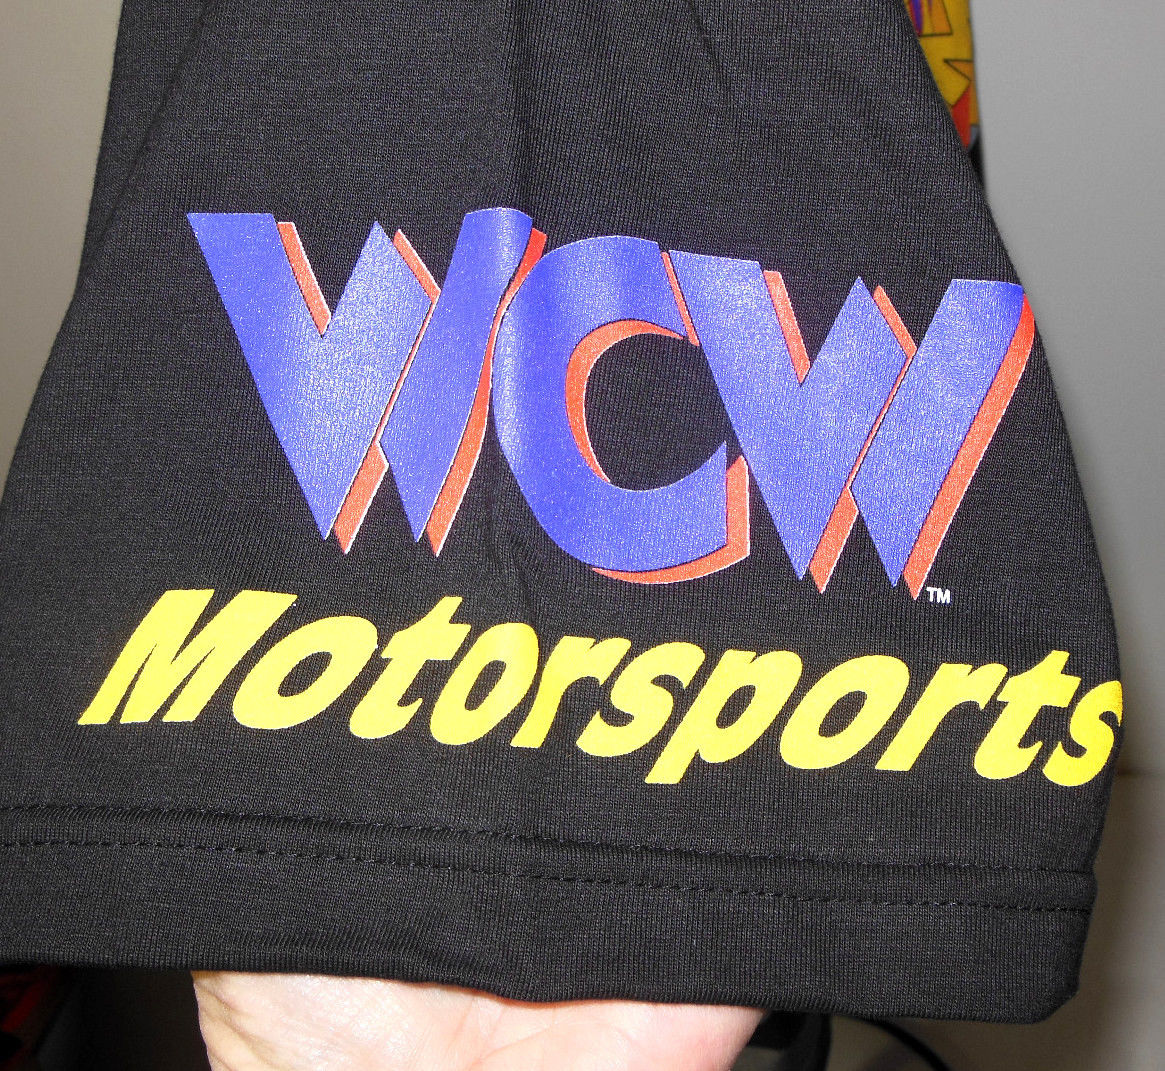 WCW Motorsports shirt 3